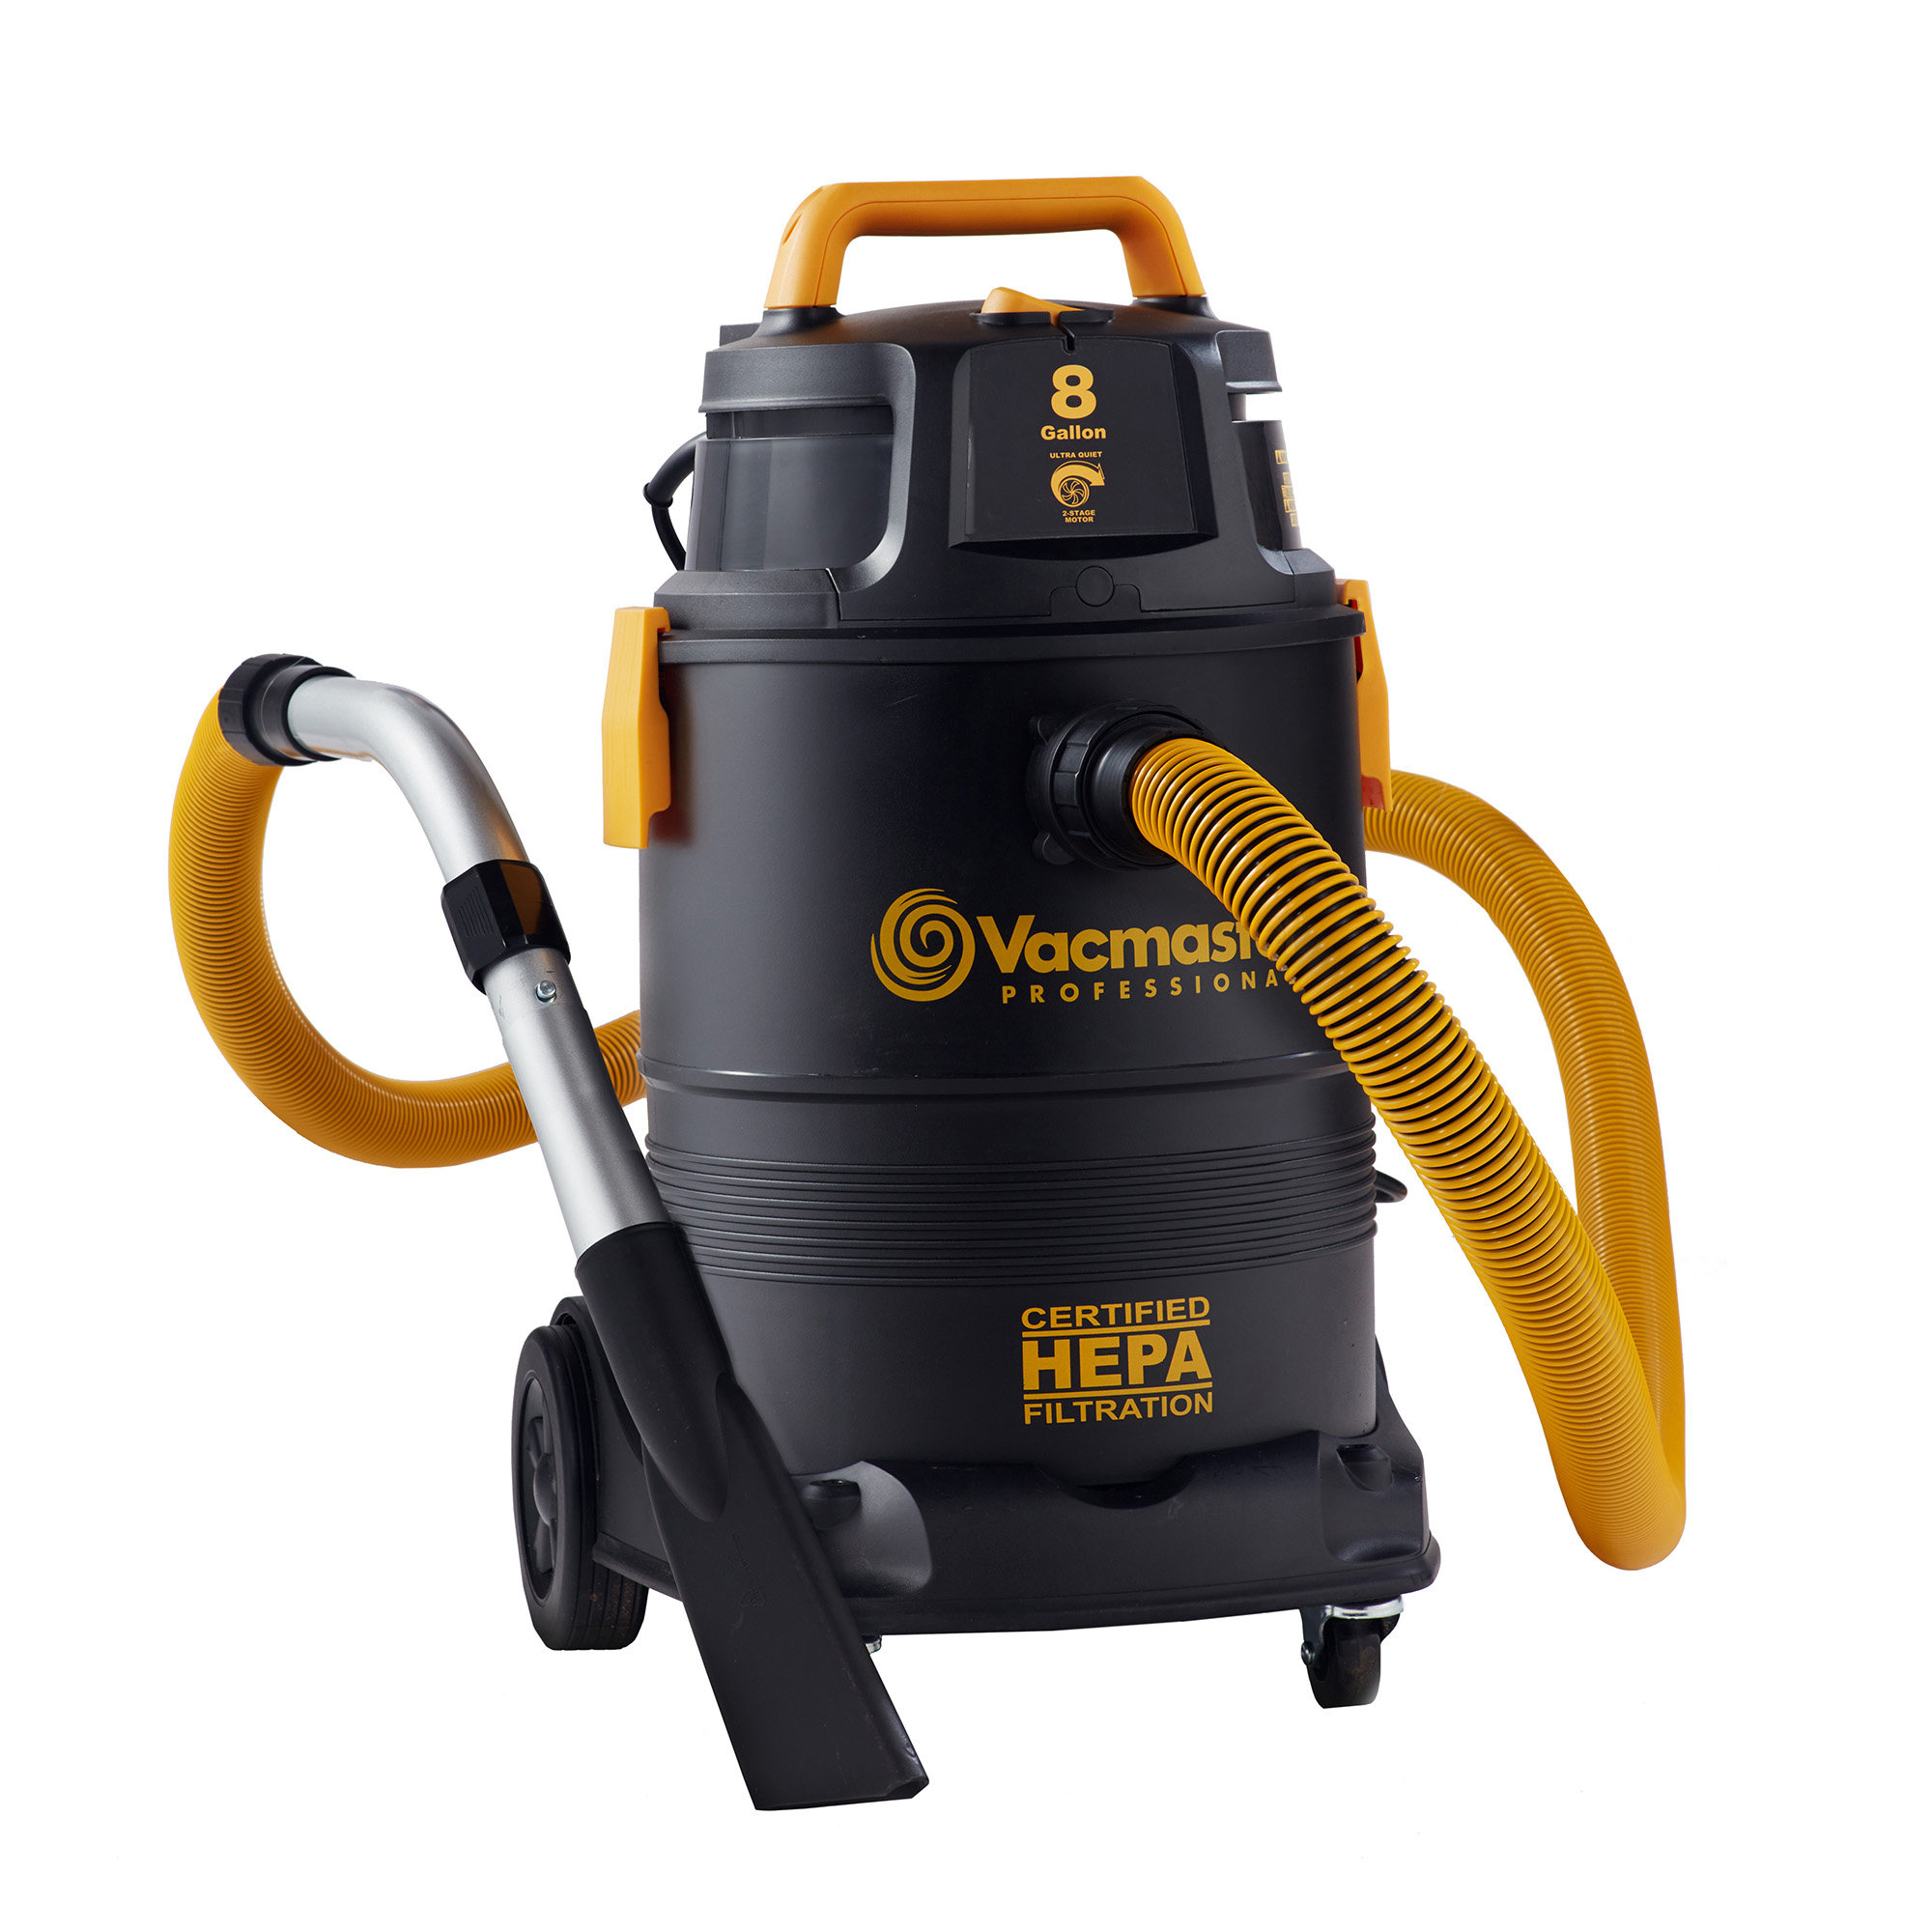 Vacmaster Professional 8 Gallon Certified HEPA Wet/Dry Vacuum, VK811PH - image 1 of 14